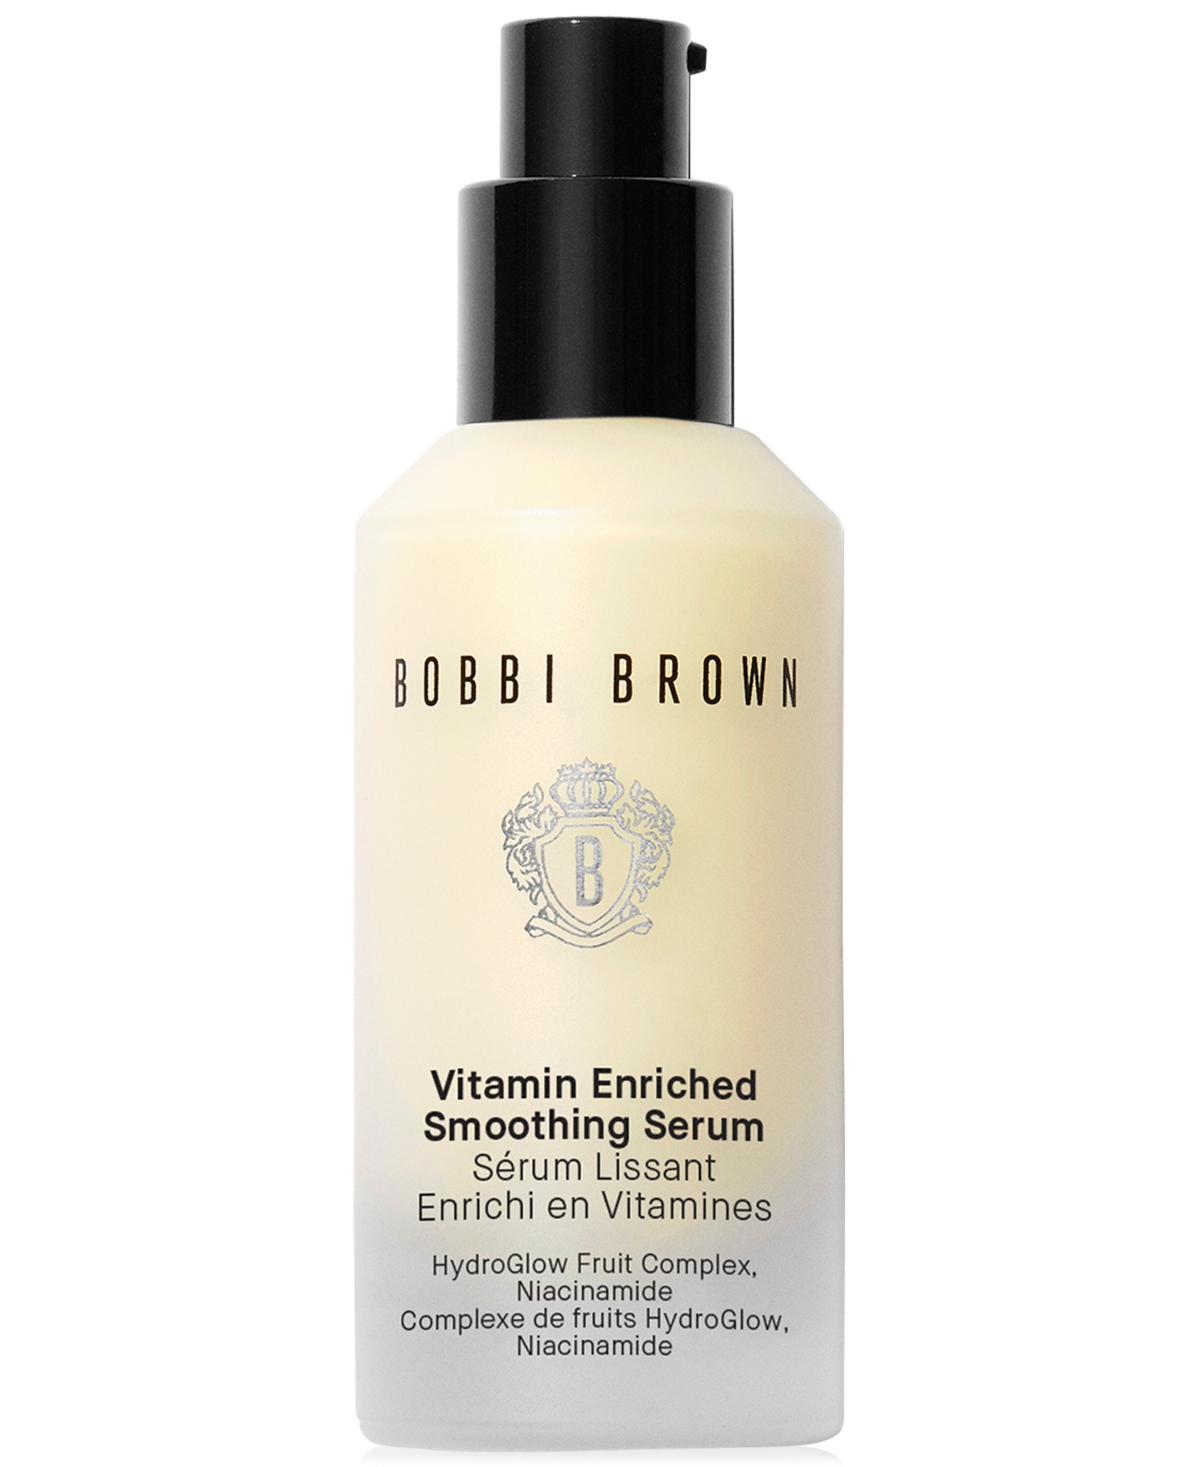 Bobbi Brown Vitamin Enriched Smoothing Serum In No Color